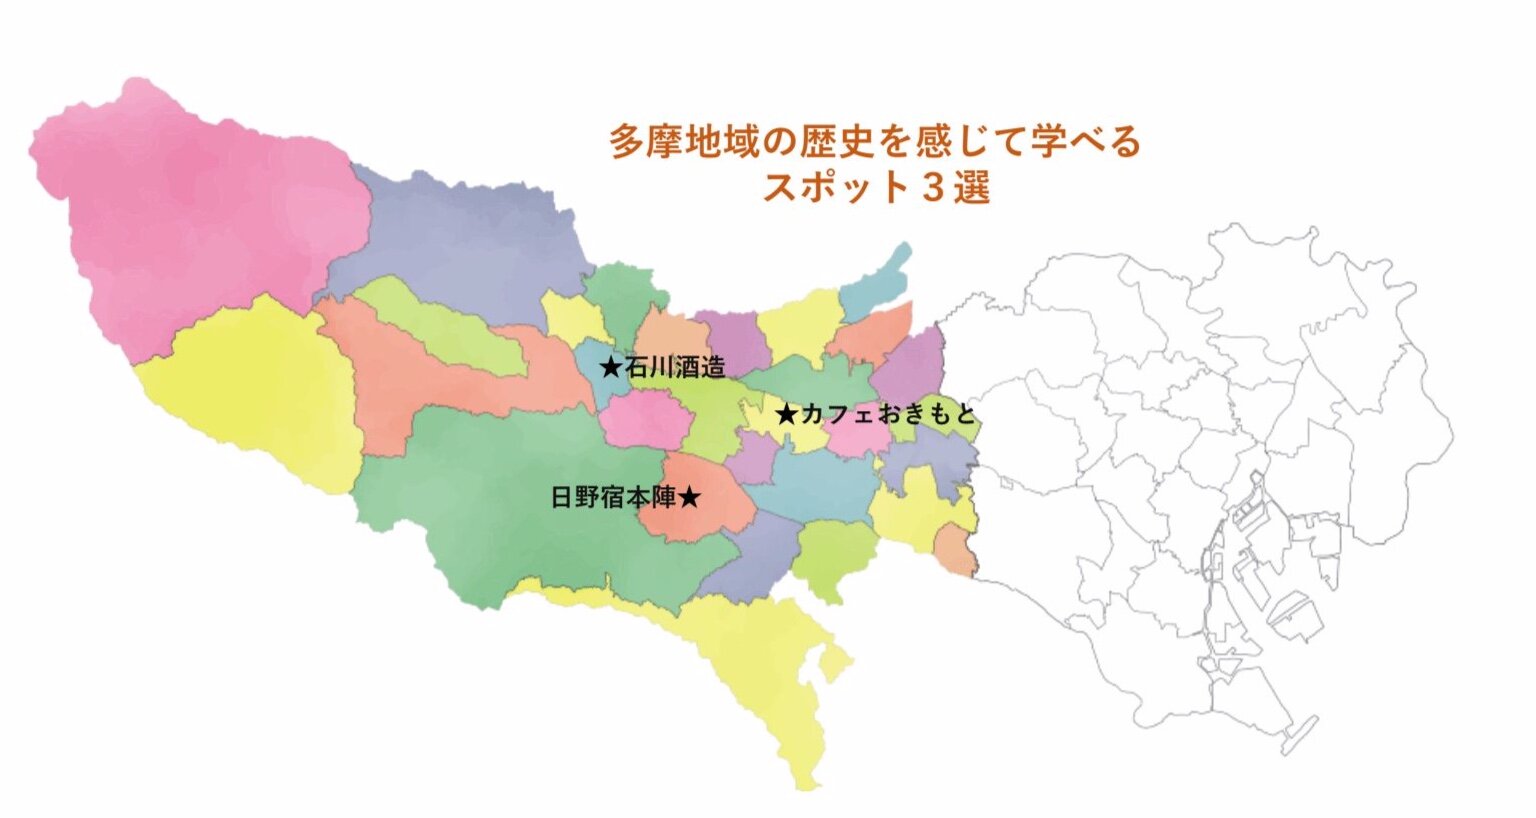 tama-rekishi-map-2.jpg